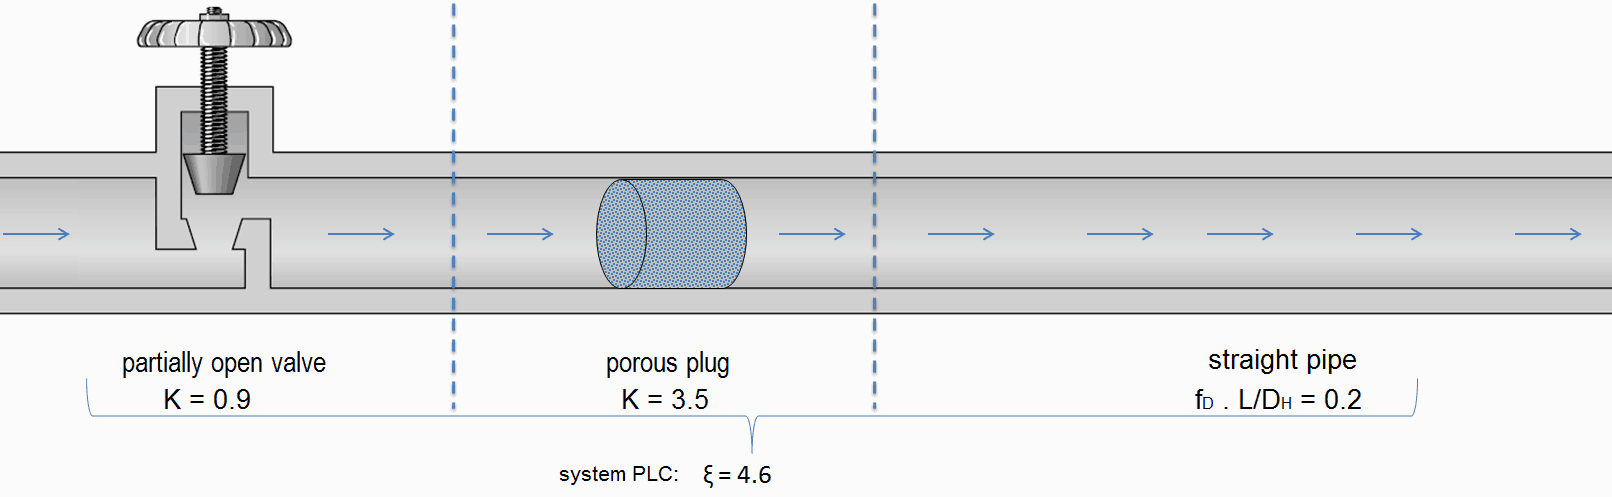 Example - pressure loss coefficient